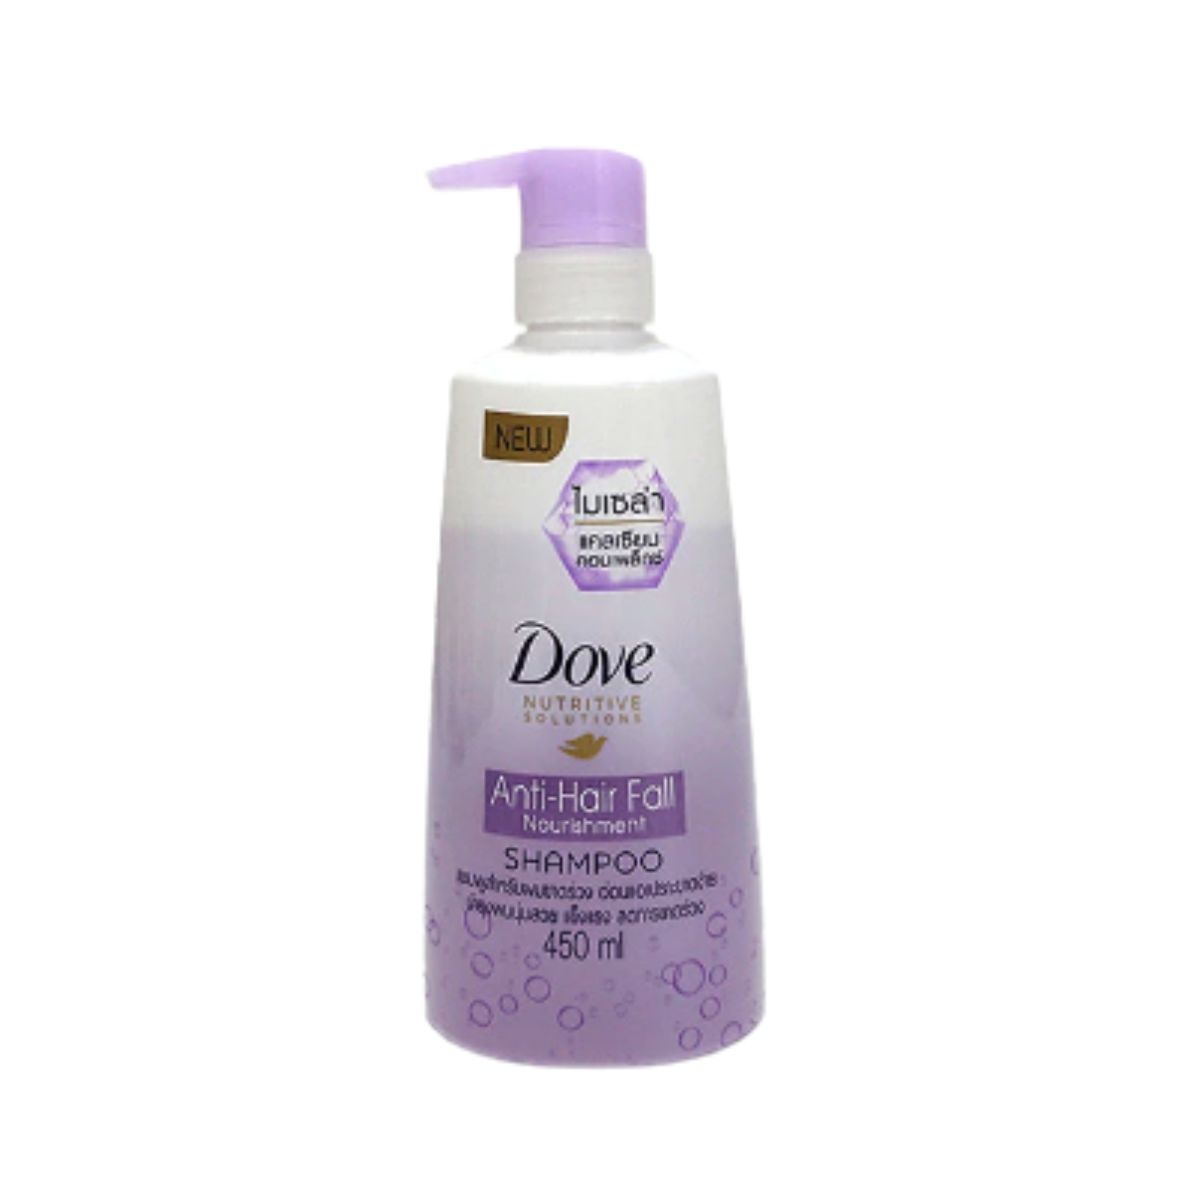 Dove Nutritive Solutions Anti-Hair Fall Nourishment Shampoo - 450ml